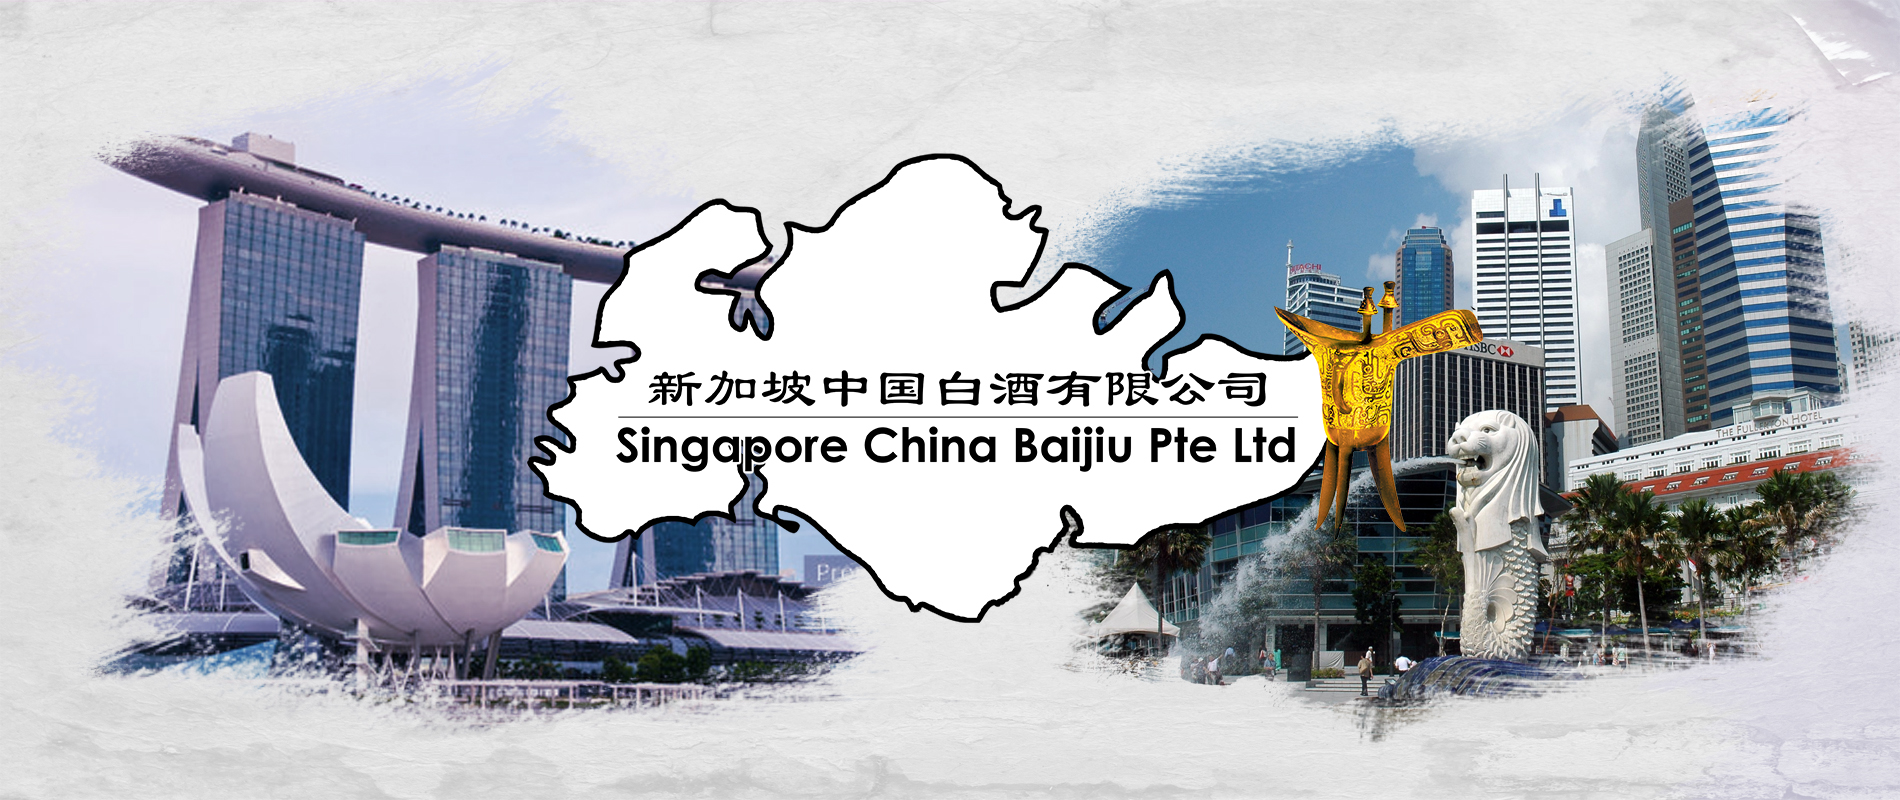 GuoJiao Products – Singapore China Baijiu Pte Ltd